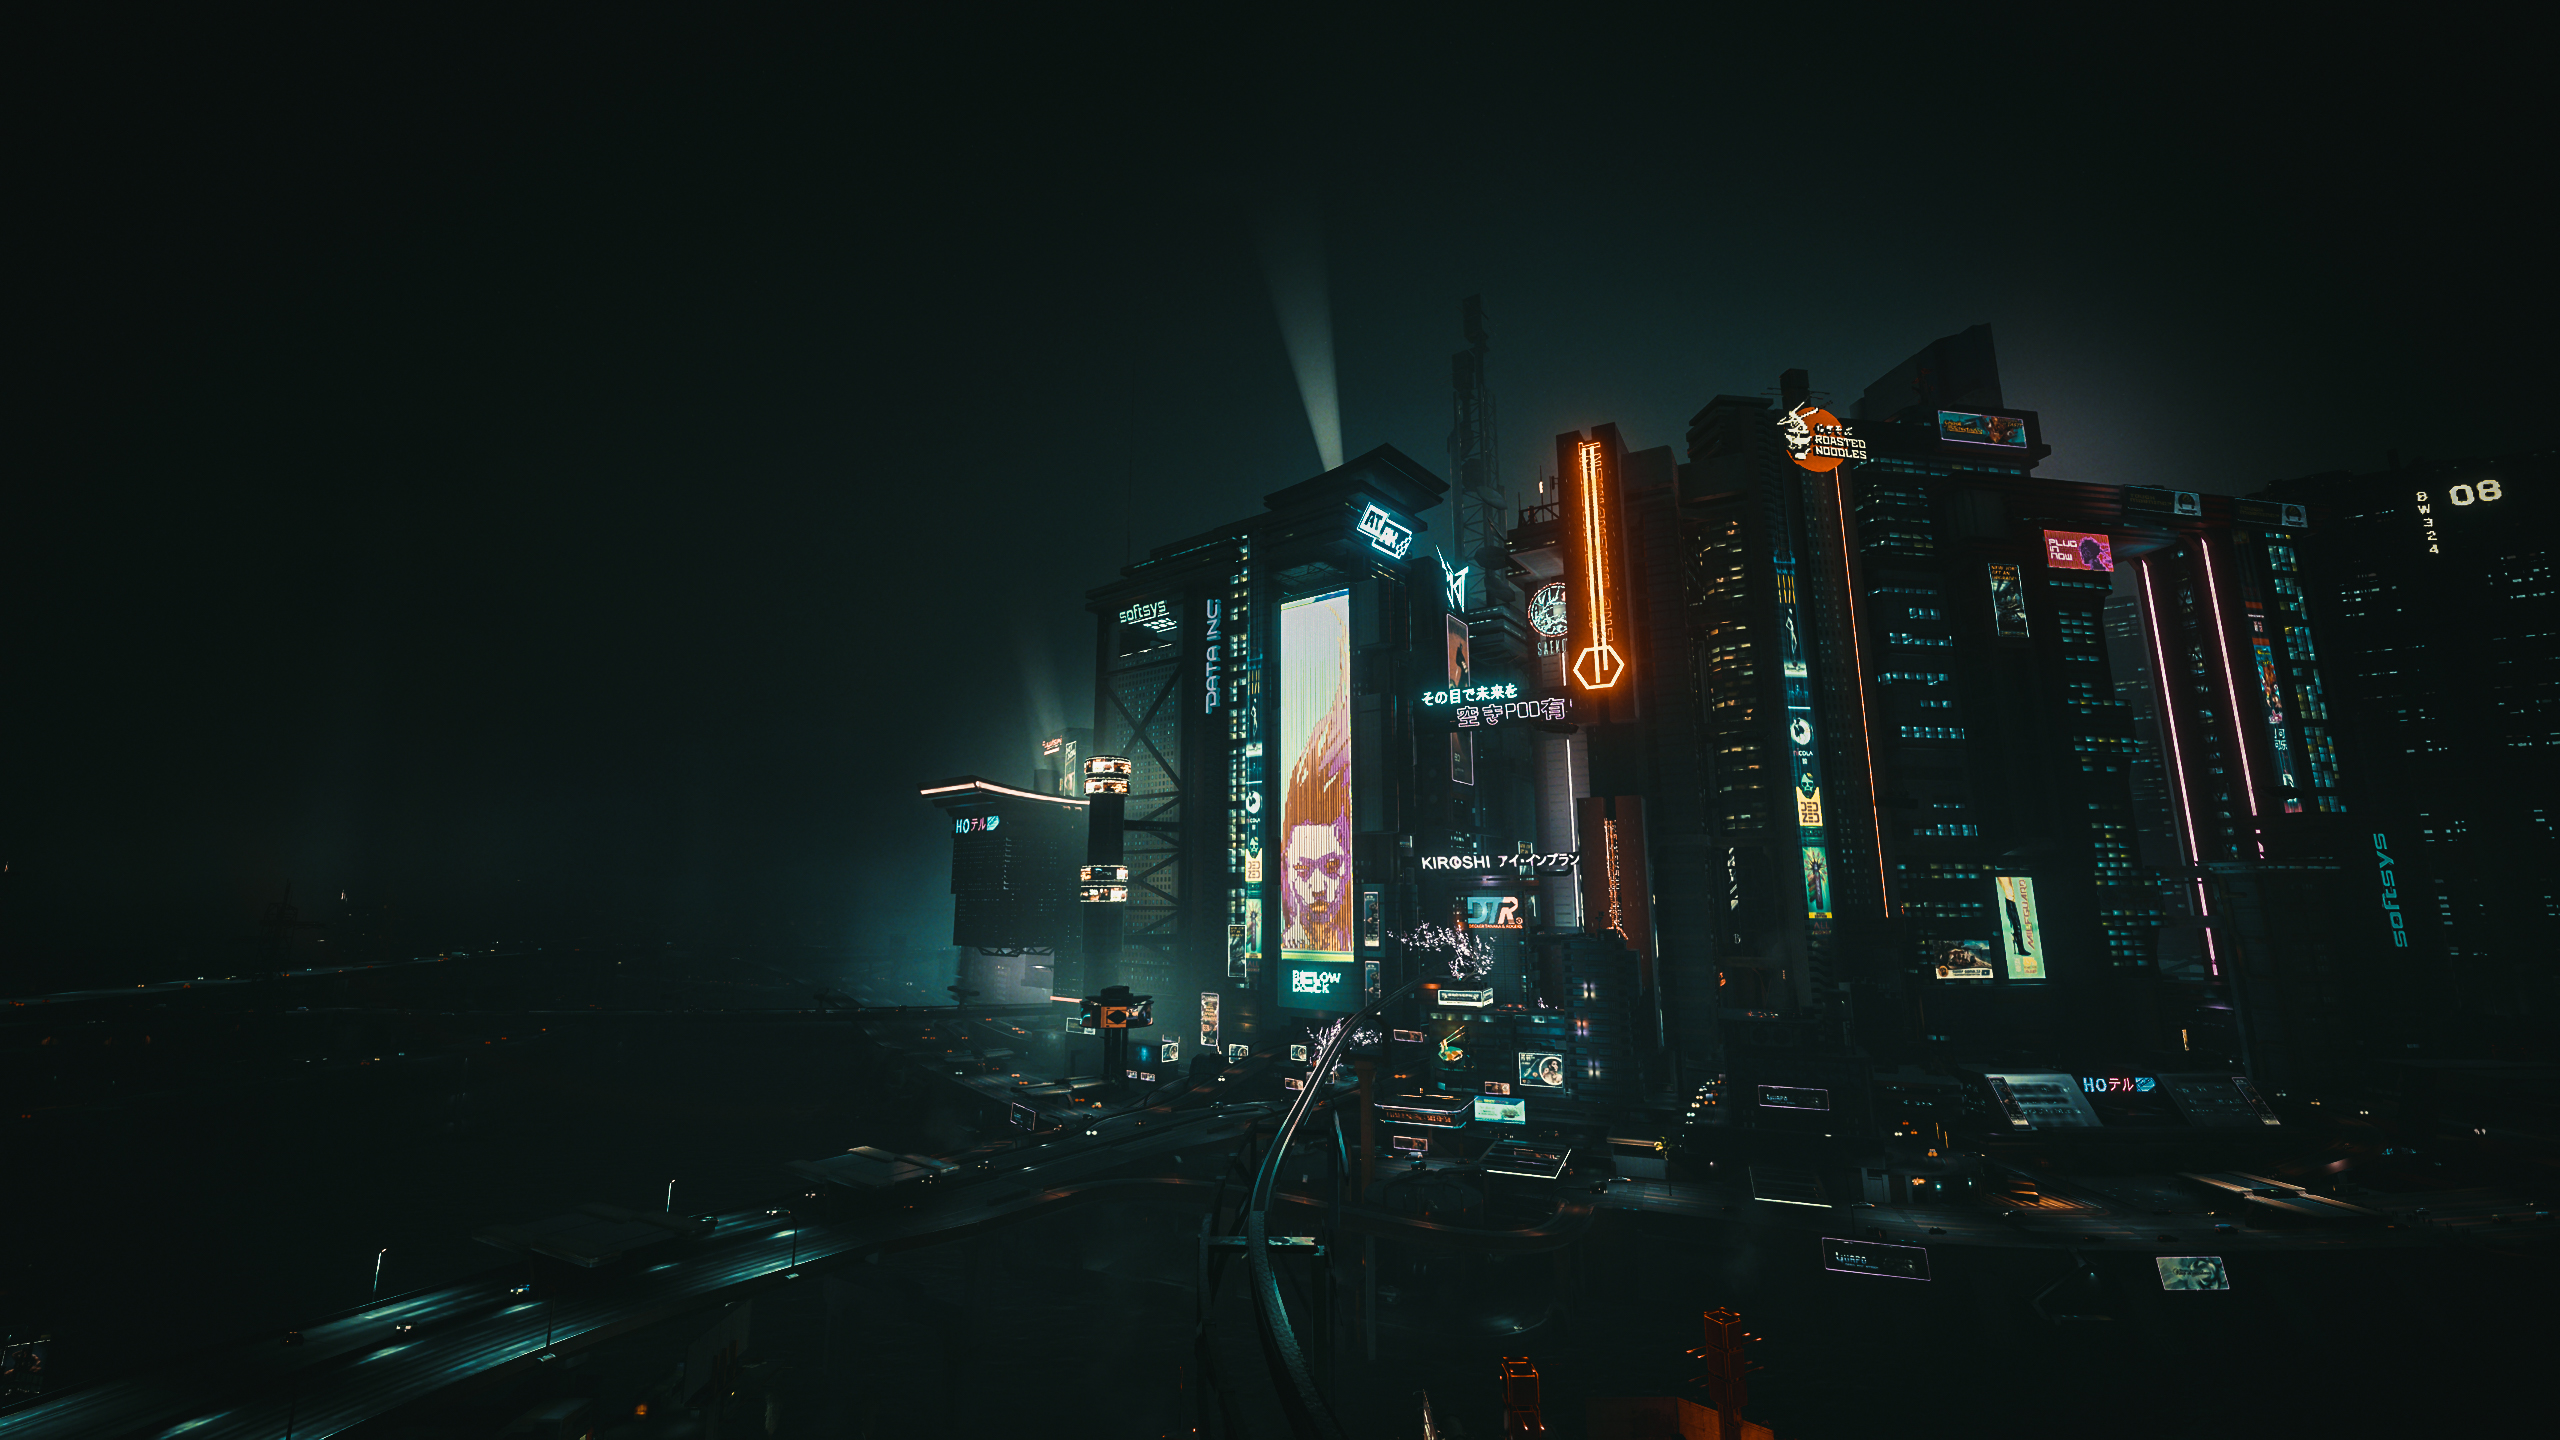 Cyberpunk Cyberpunk 2077 Cyber City Futuristic City Neon Video Games Wallpaper Resolution 2499